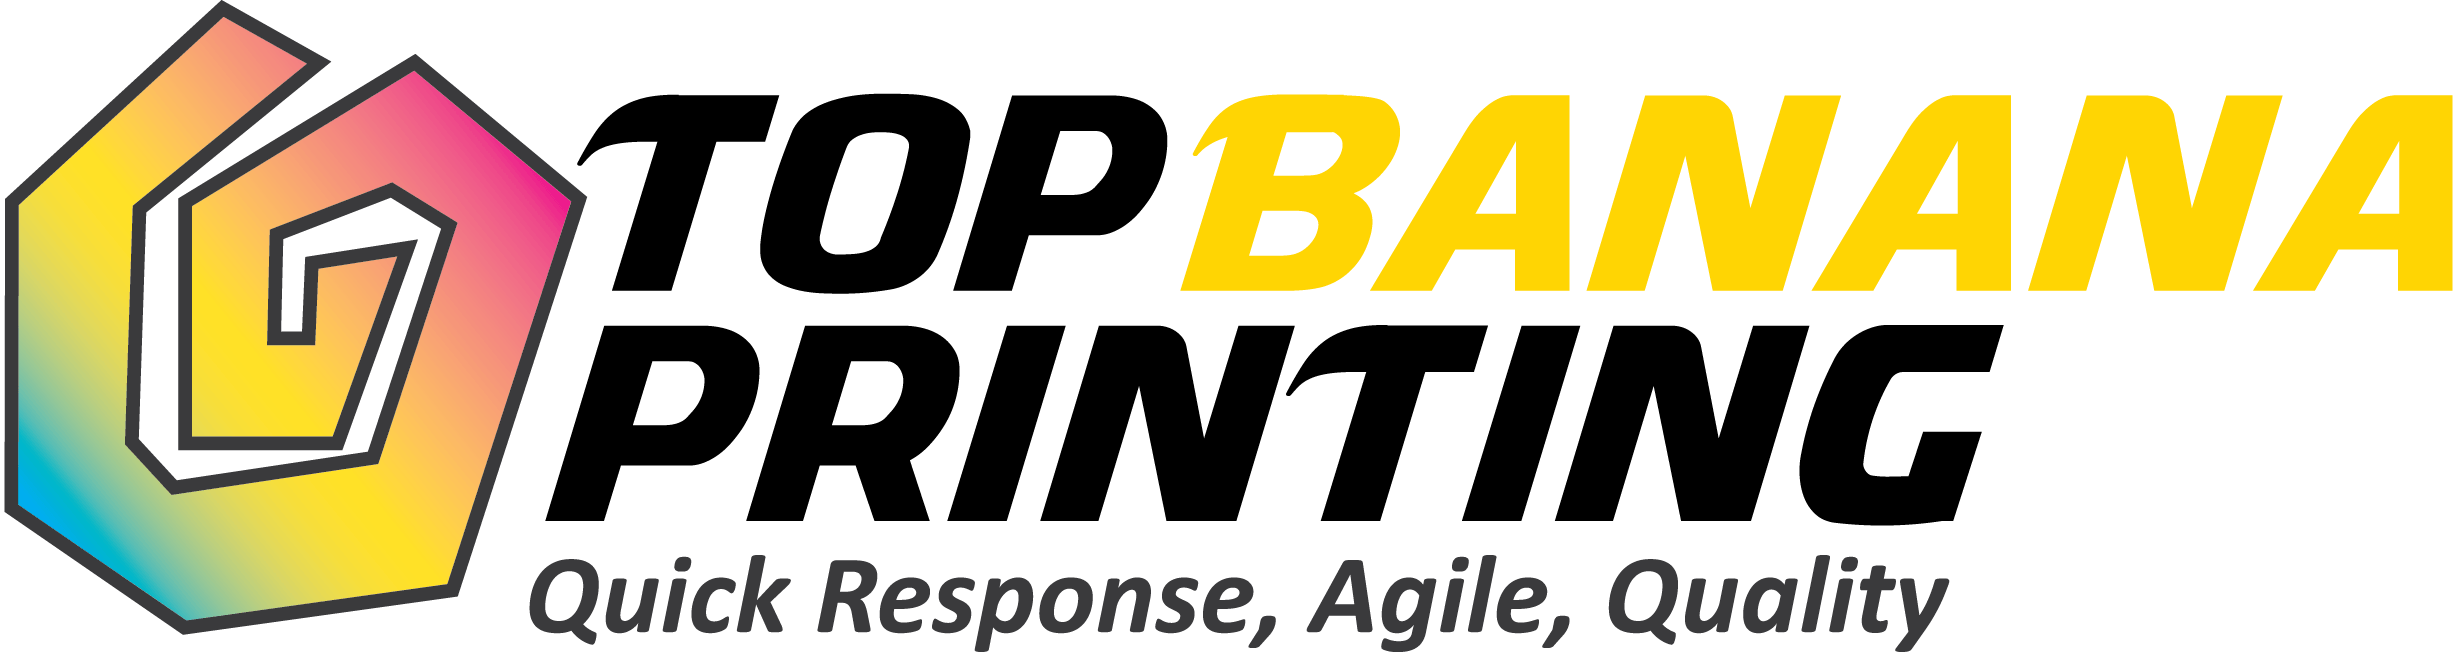 DTG Printing Logo - Direct to Garment Printing | Top Banana Philadelphia